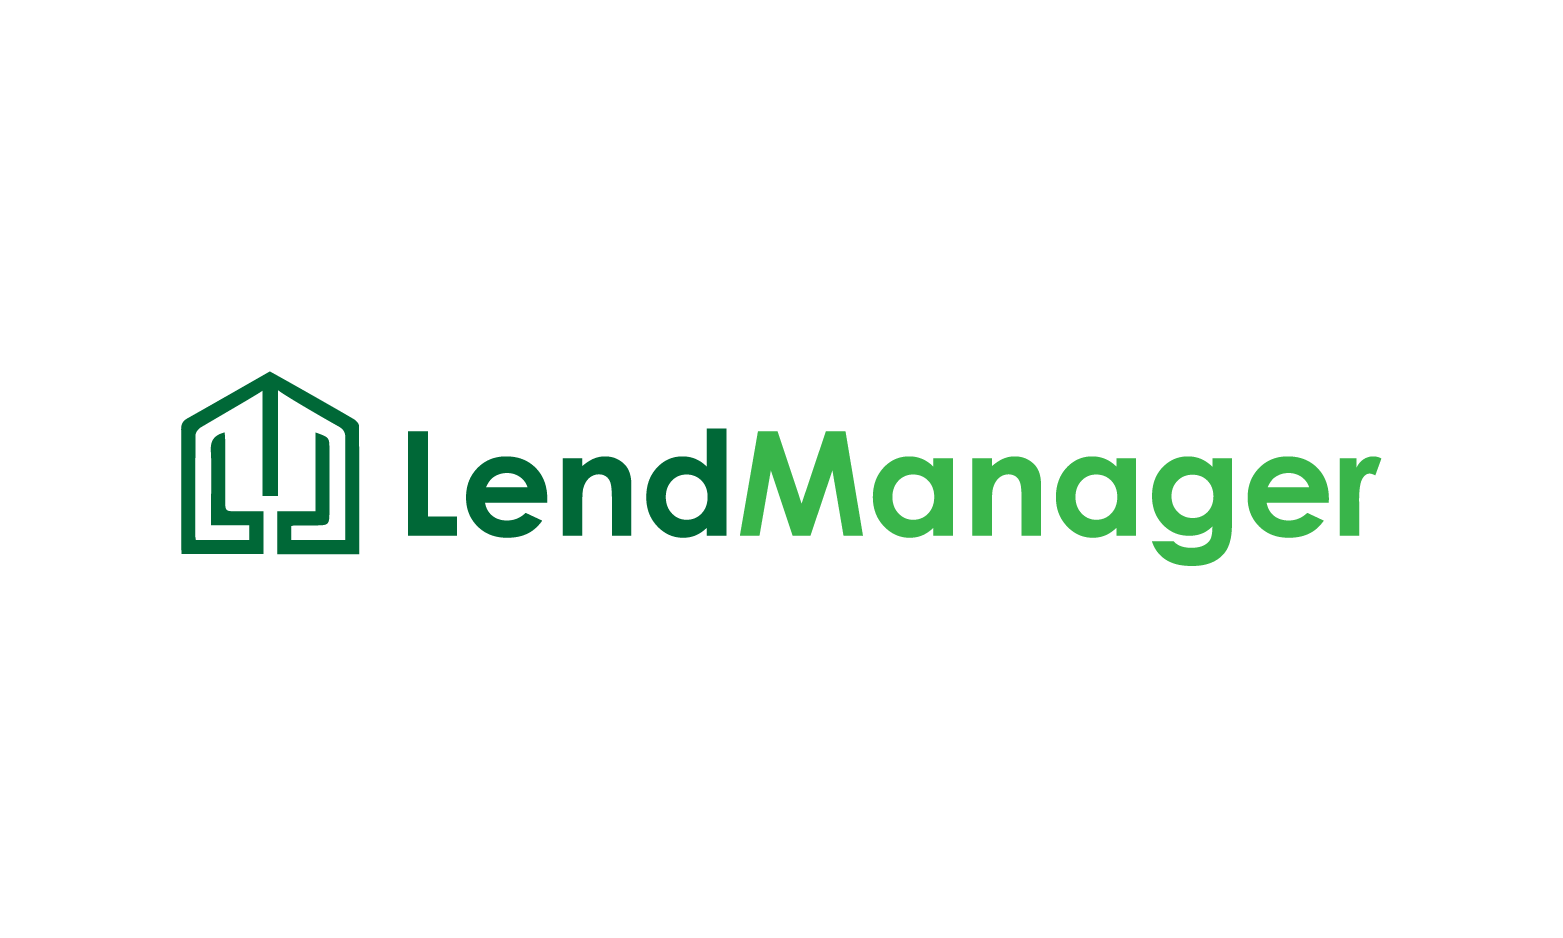 LendManager.com - Creative brandable domain for sale